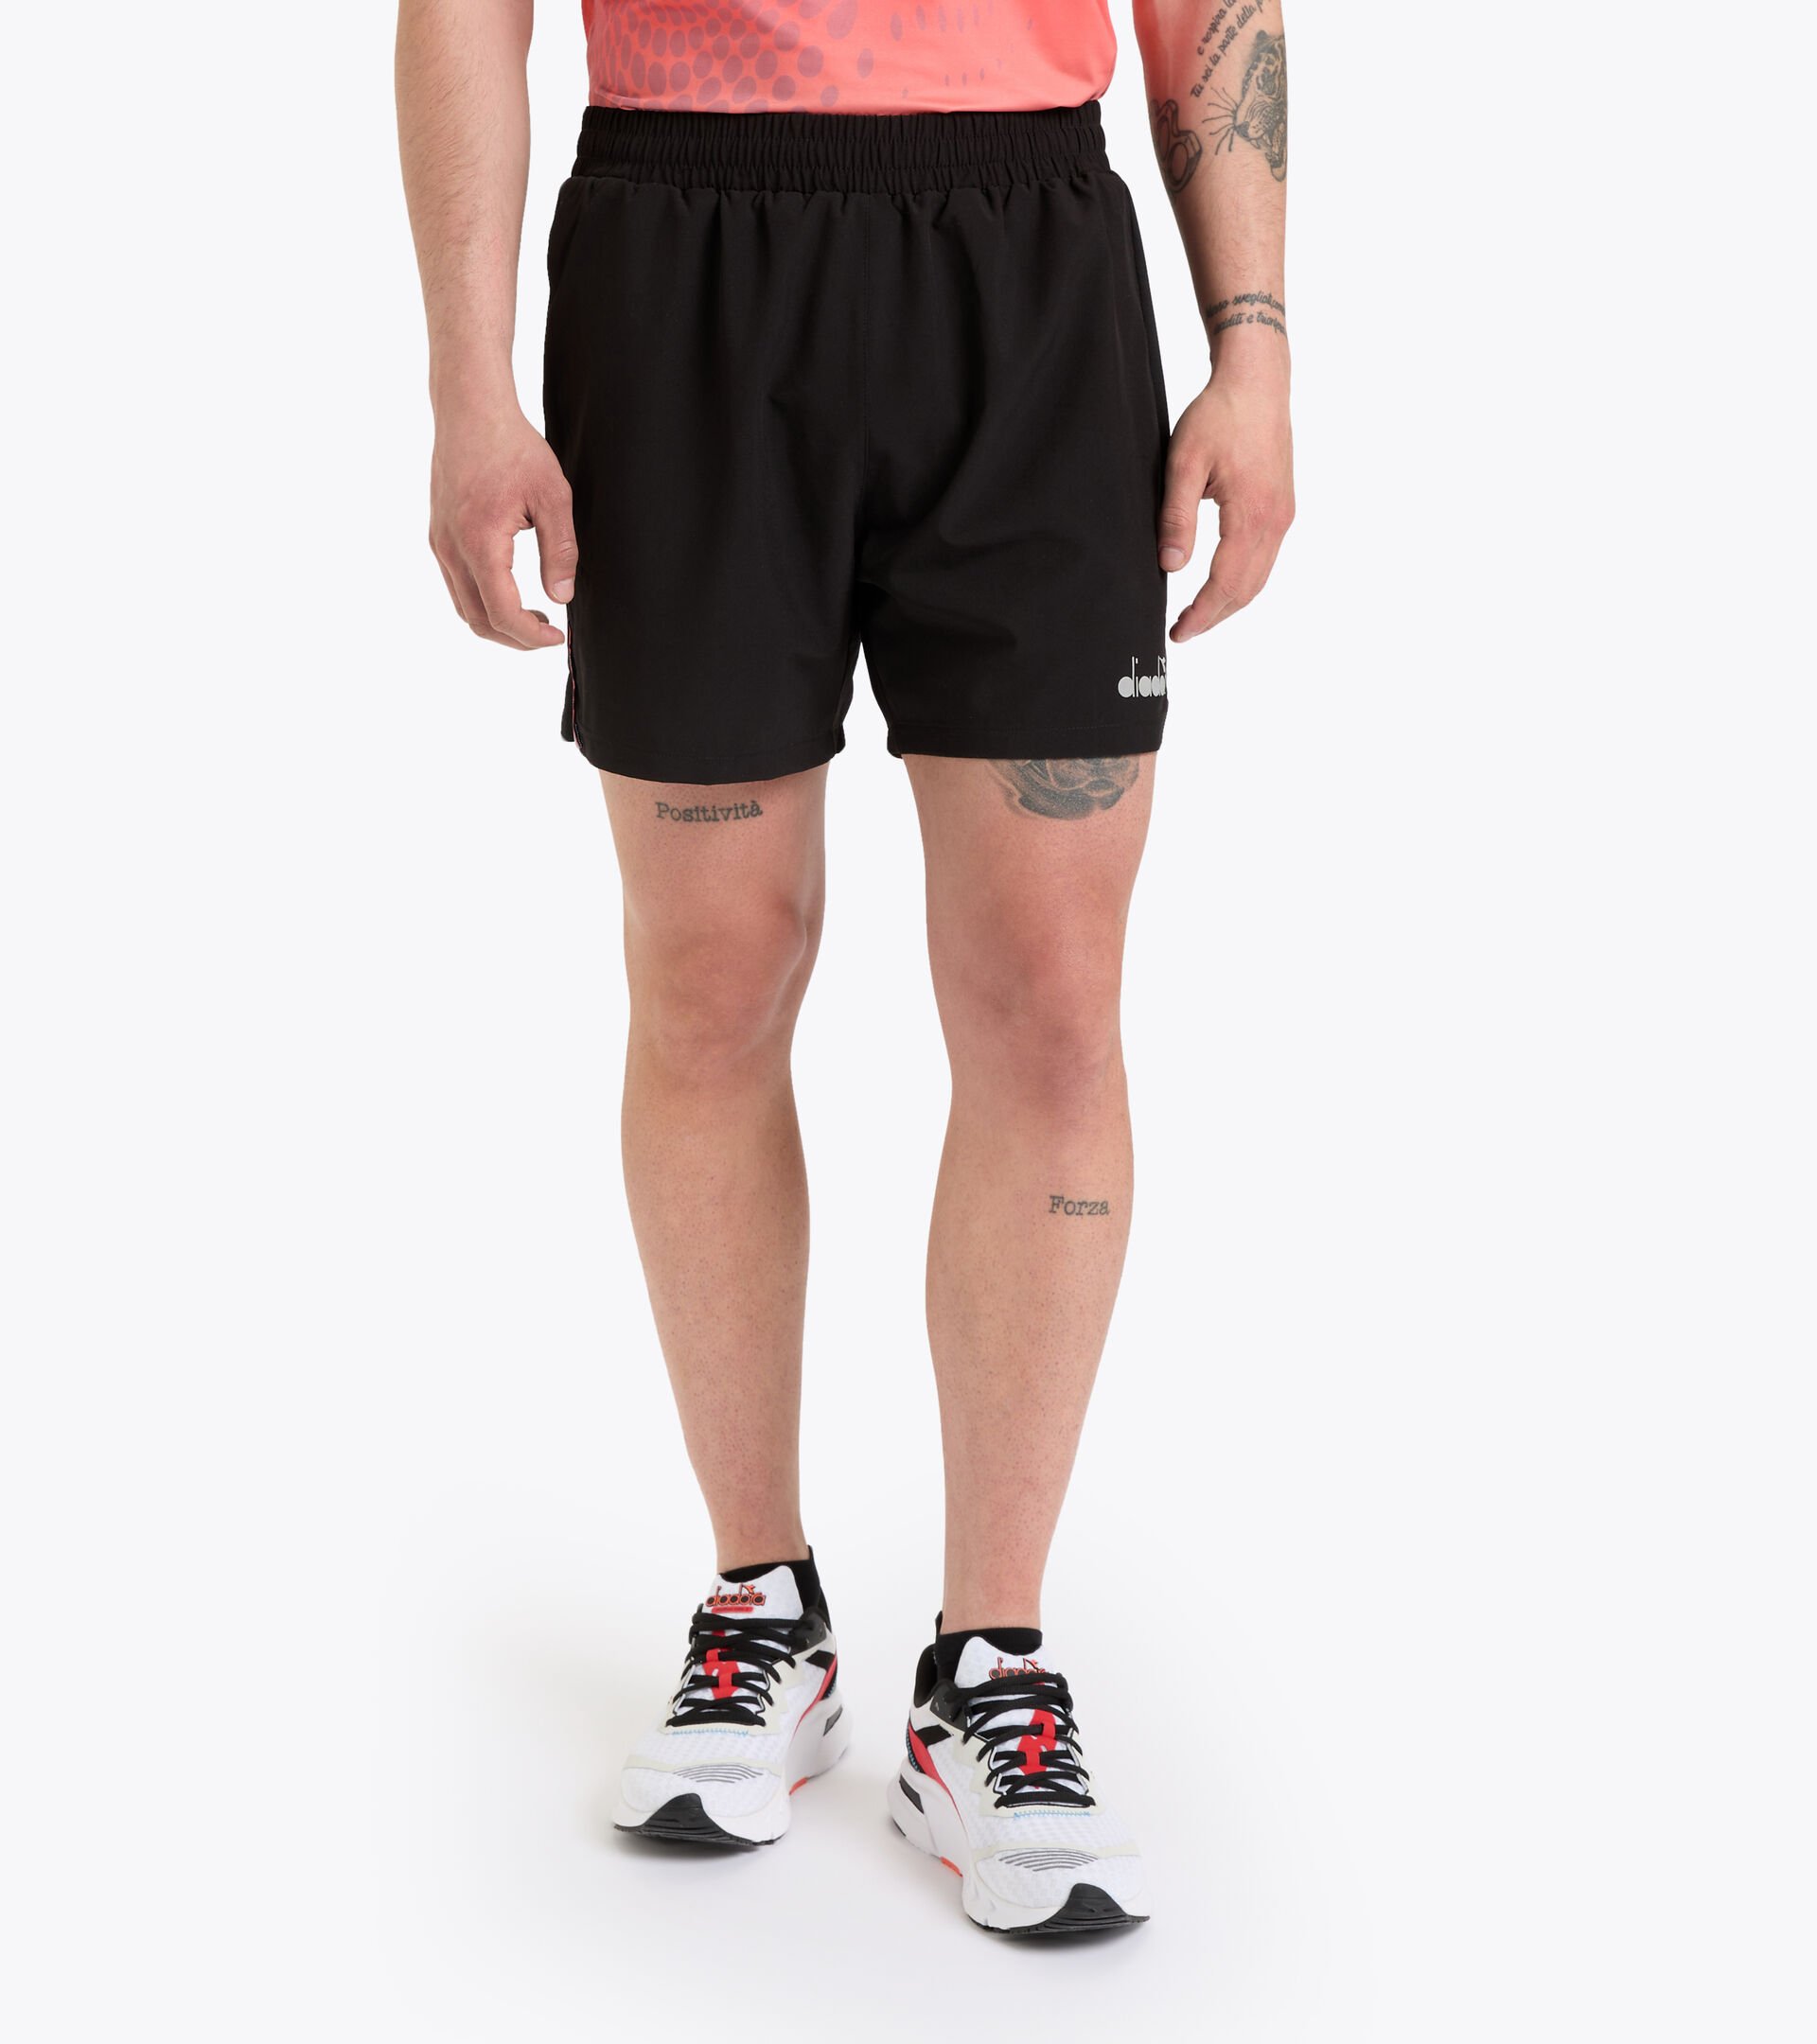 Pantalones cortos para correr - Hombre  MICROFIBER SHORTS 12,5 CM NEGRO - Diadora